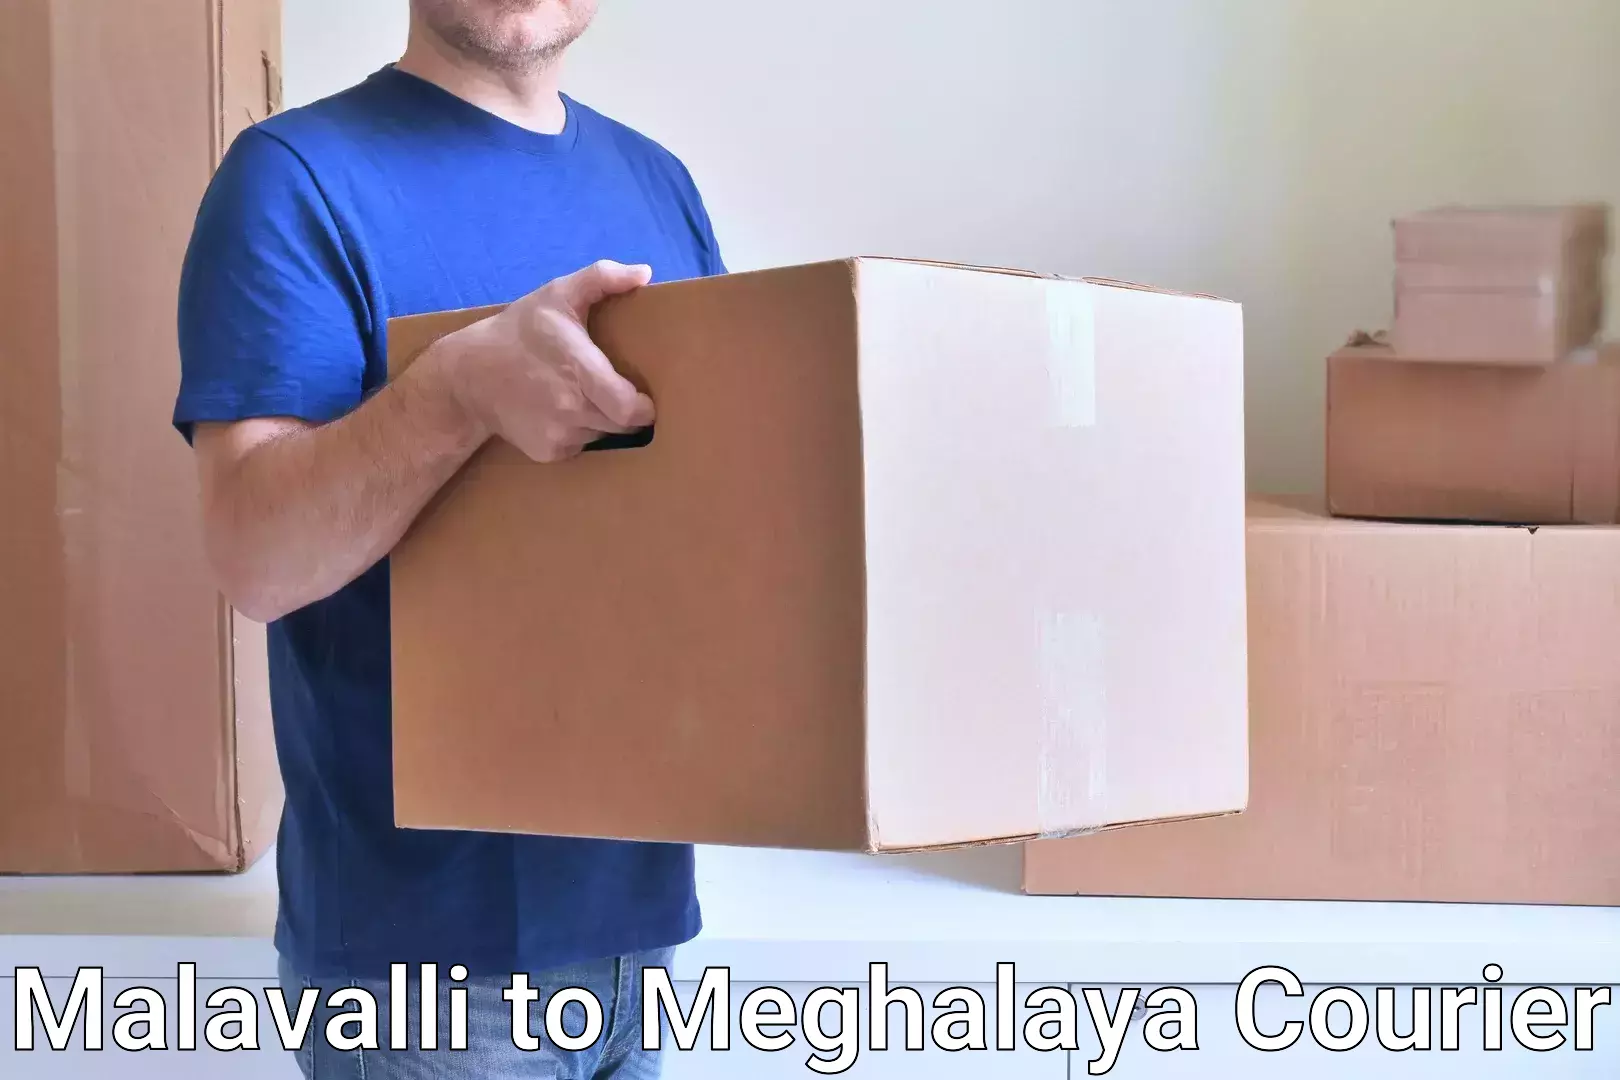 Courier service partnerships in Malavalli to Williamnagar